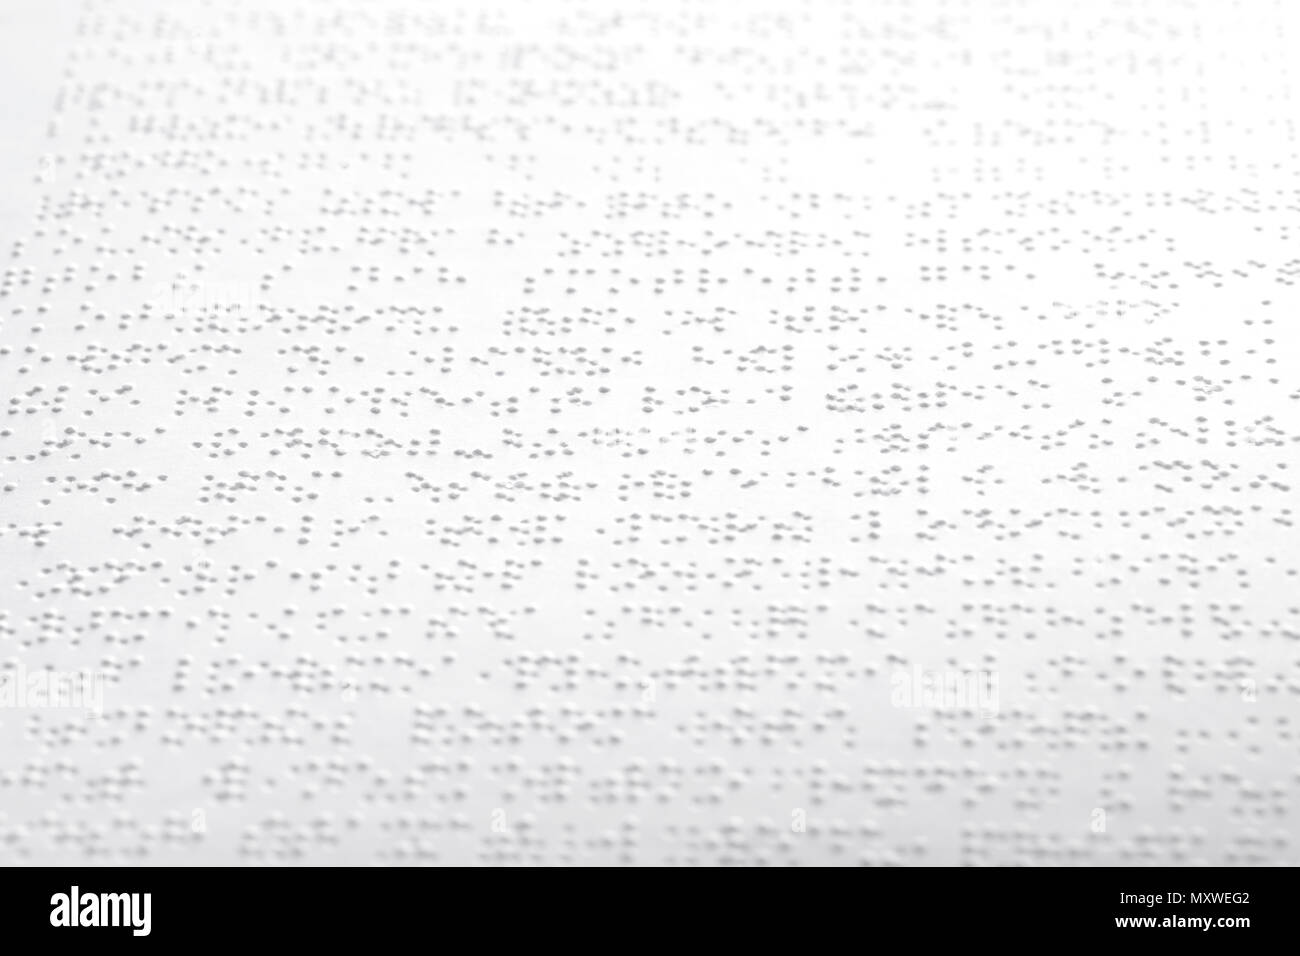 Formación de un libro con texto en Braille. Foto de stock